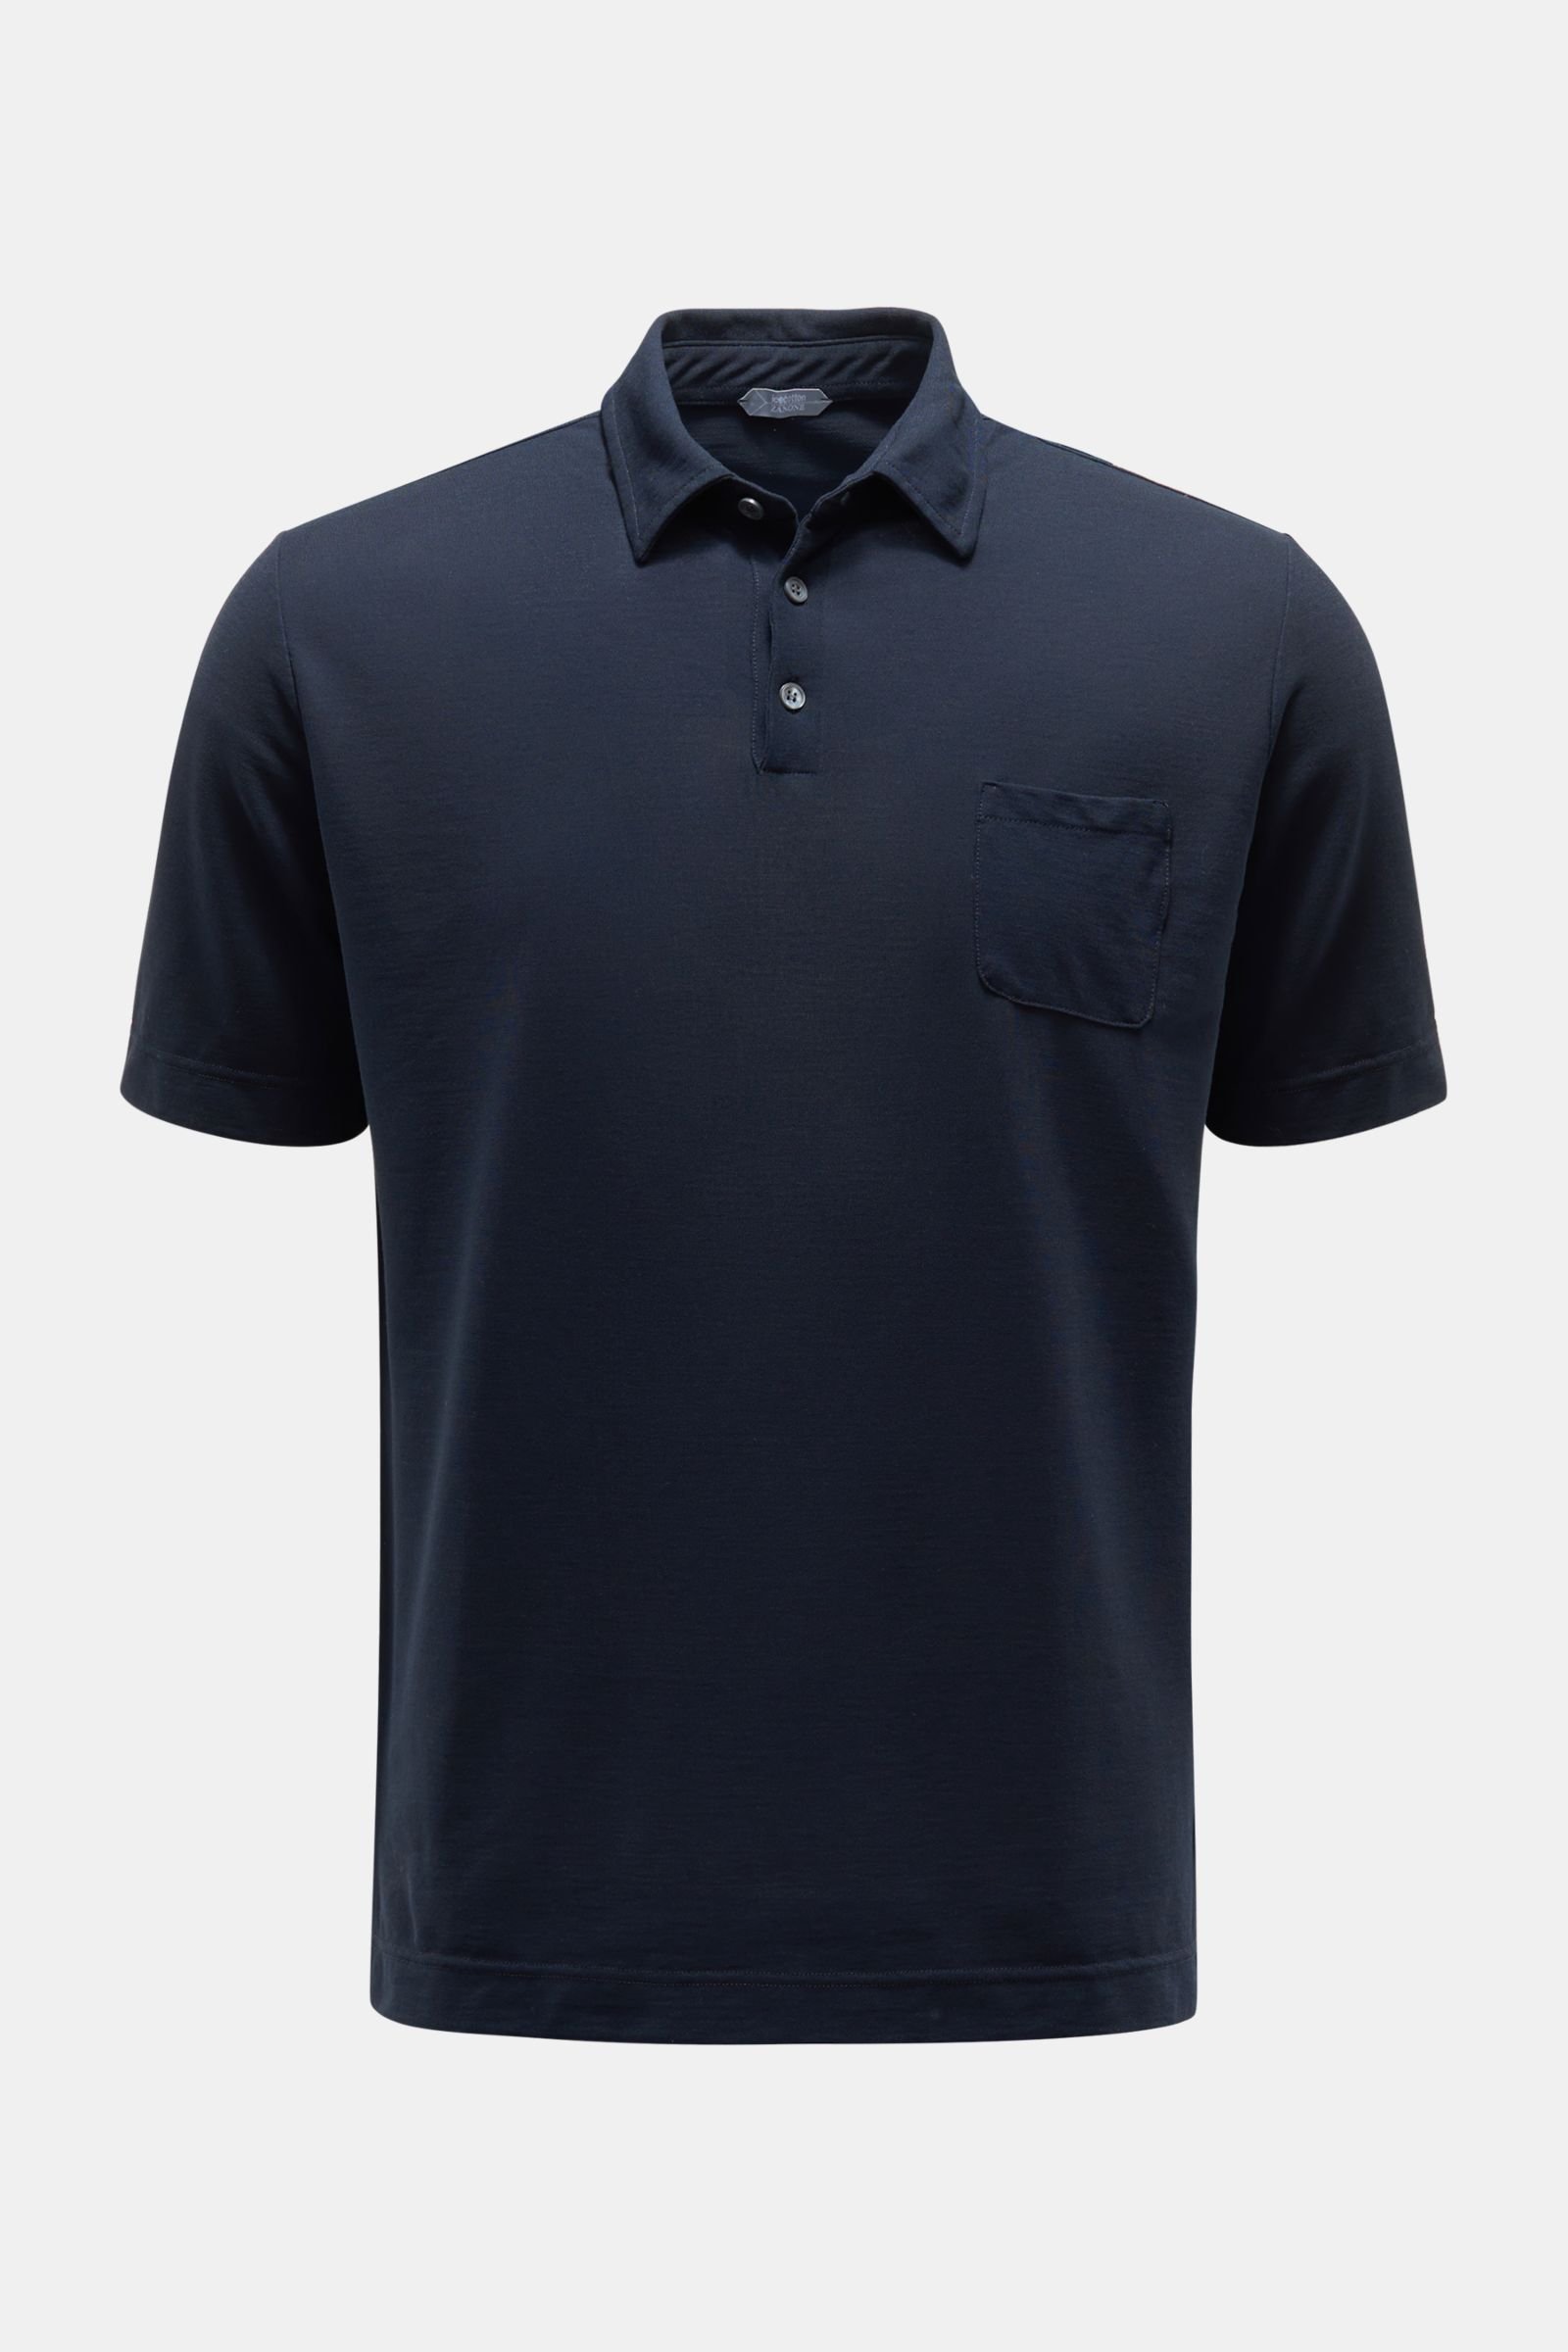 Jersey polo shirt navy